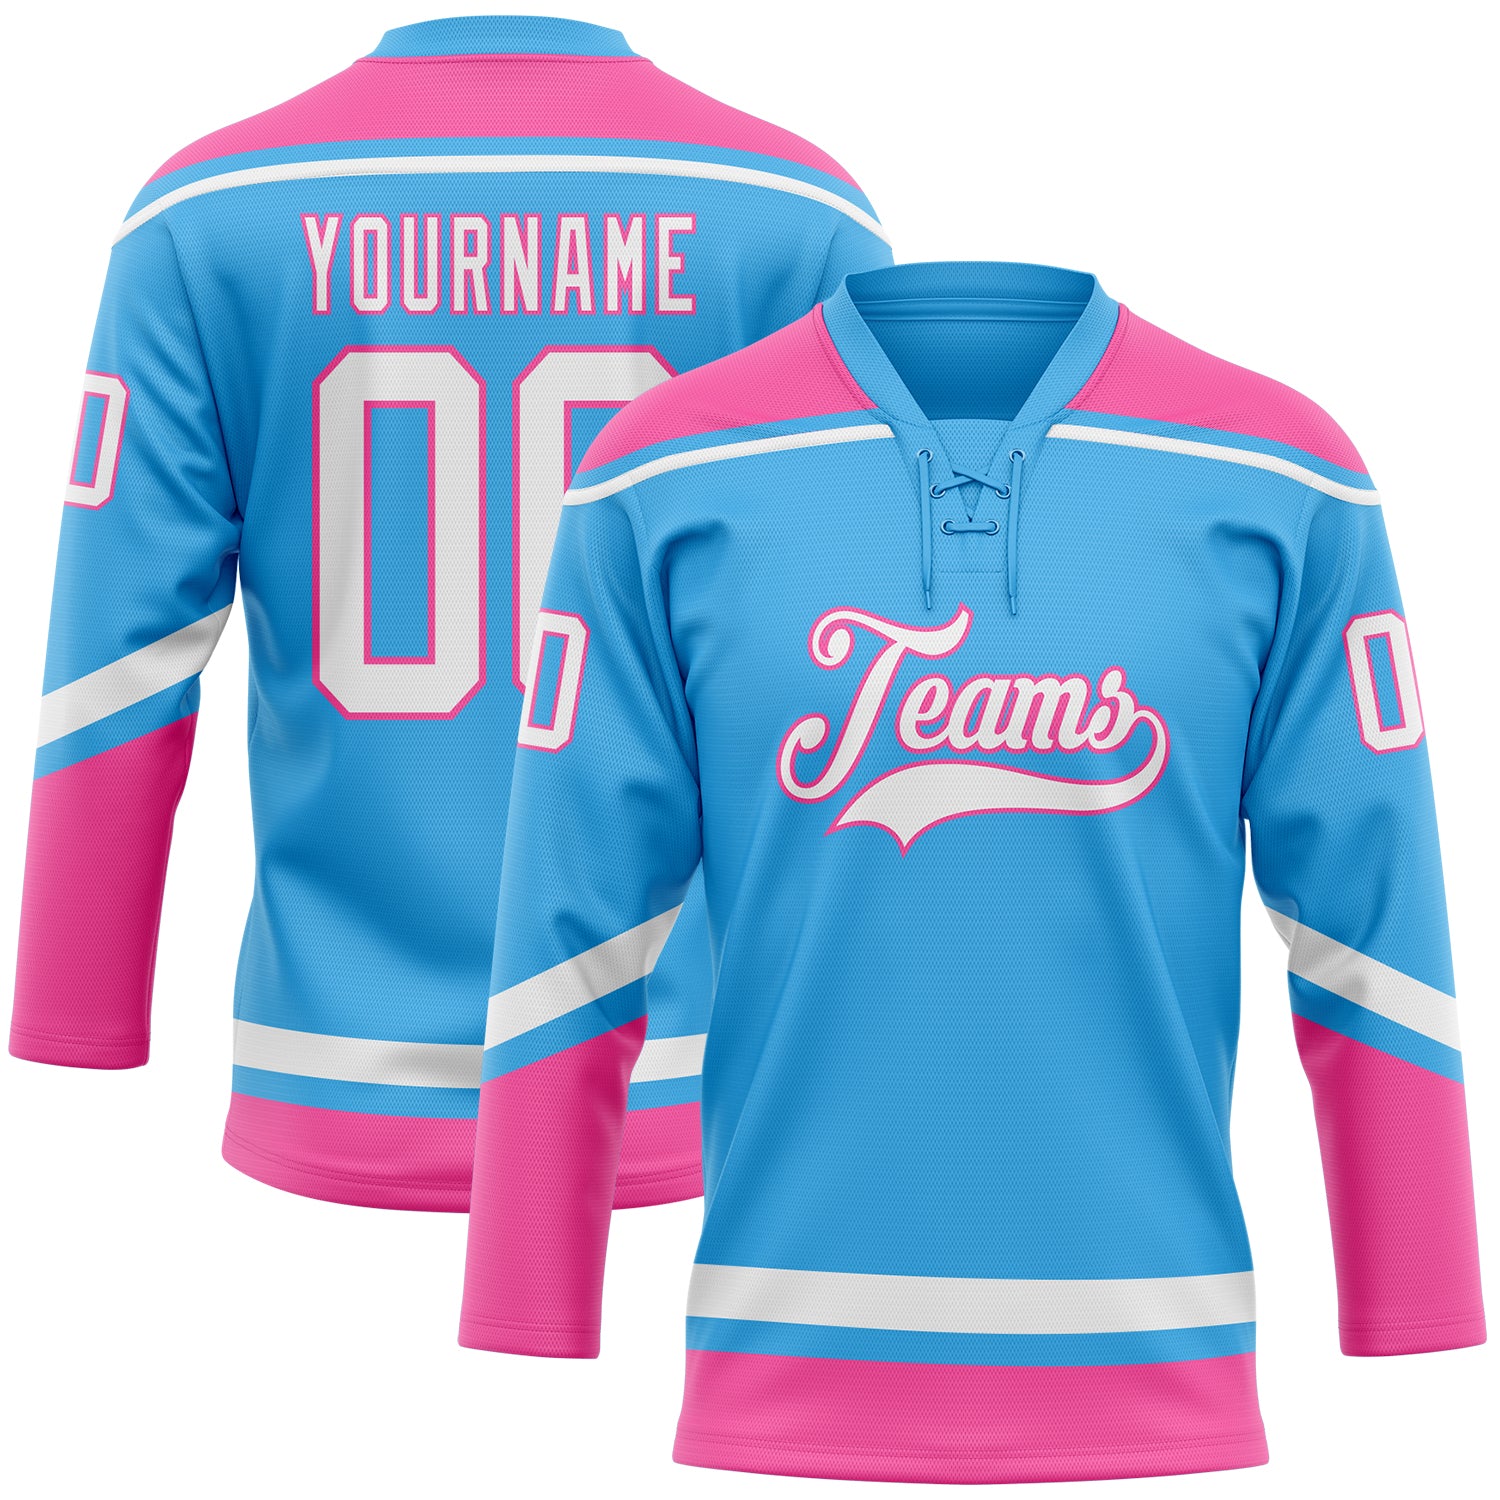 Custom Black Pink-Light Blue Hockey Jersey Women's Size:M